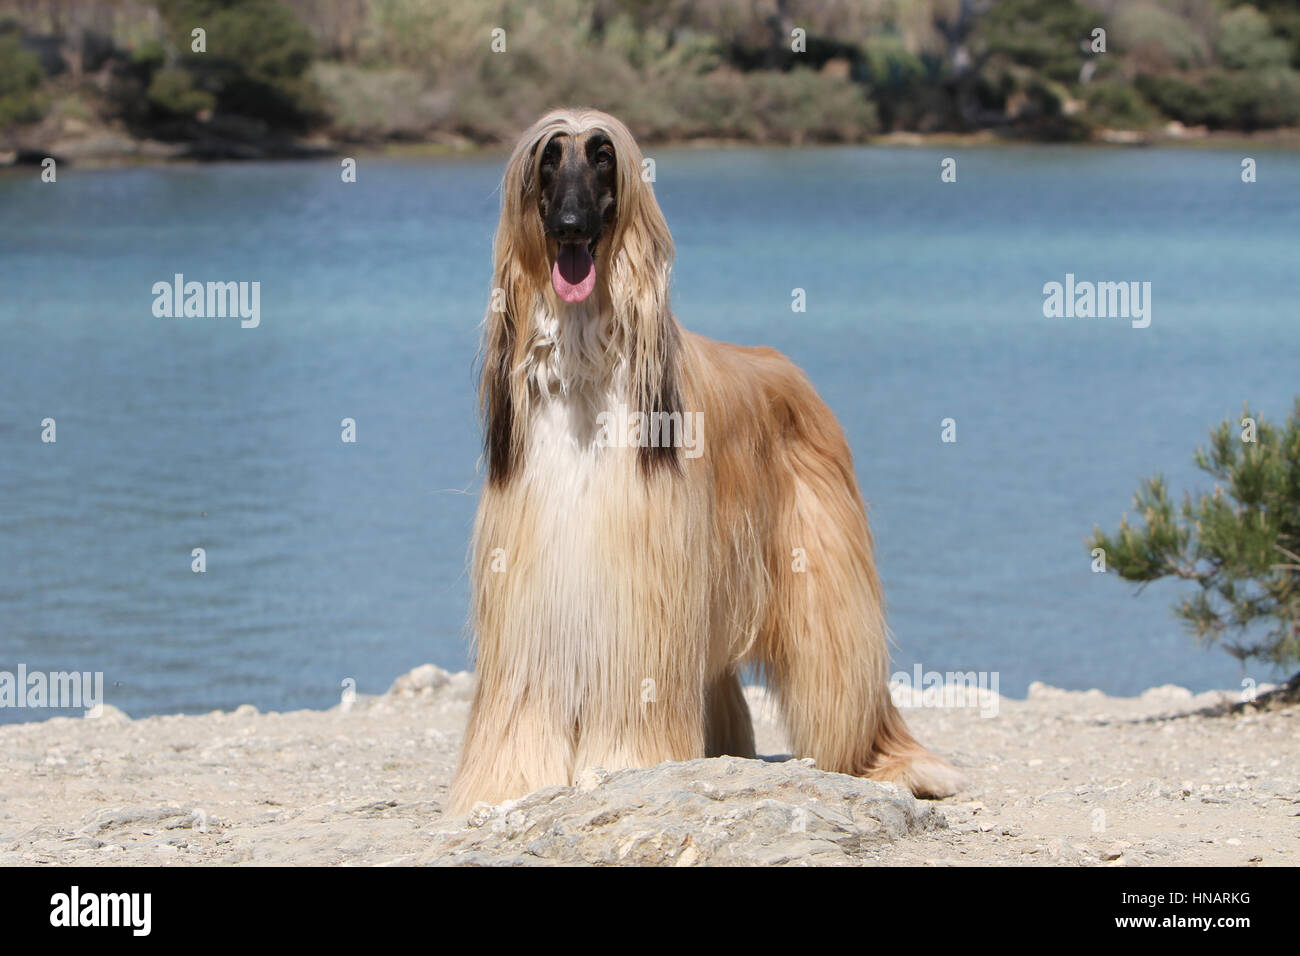 Hund Afghan Hound Dog Windhund Greyhound pet Stockfoto